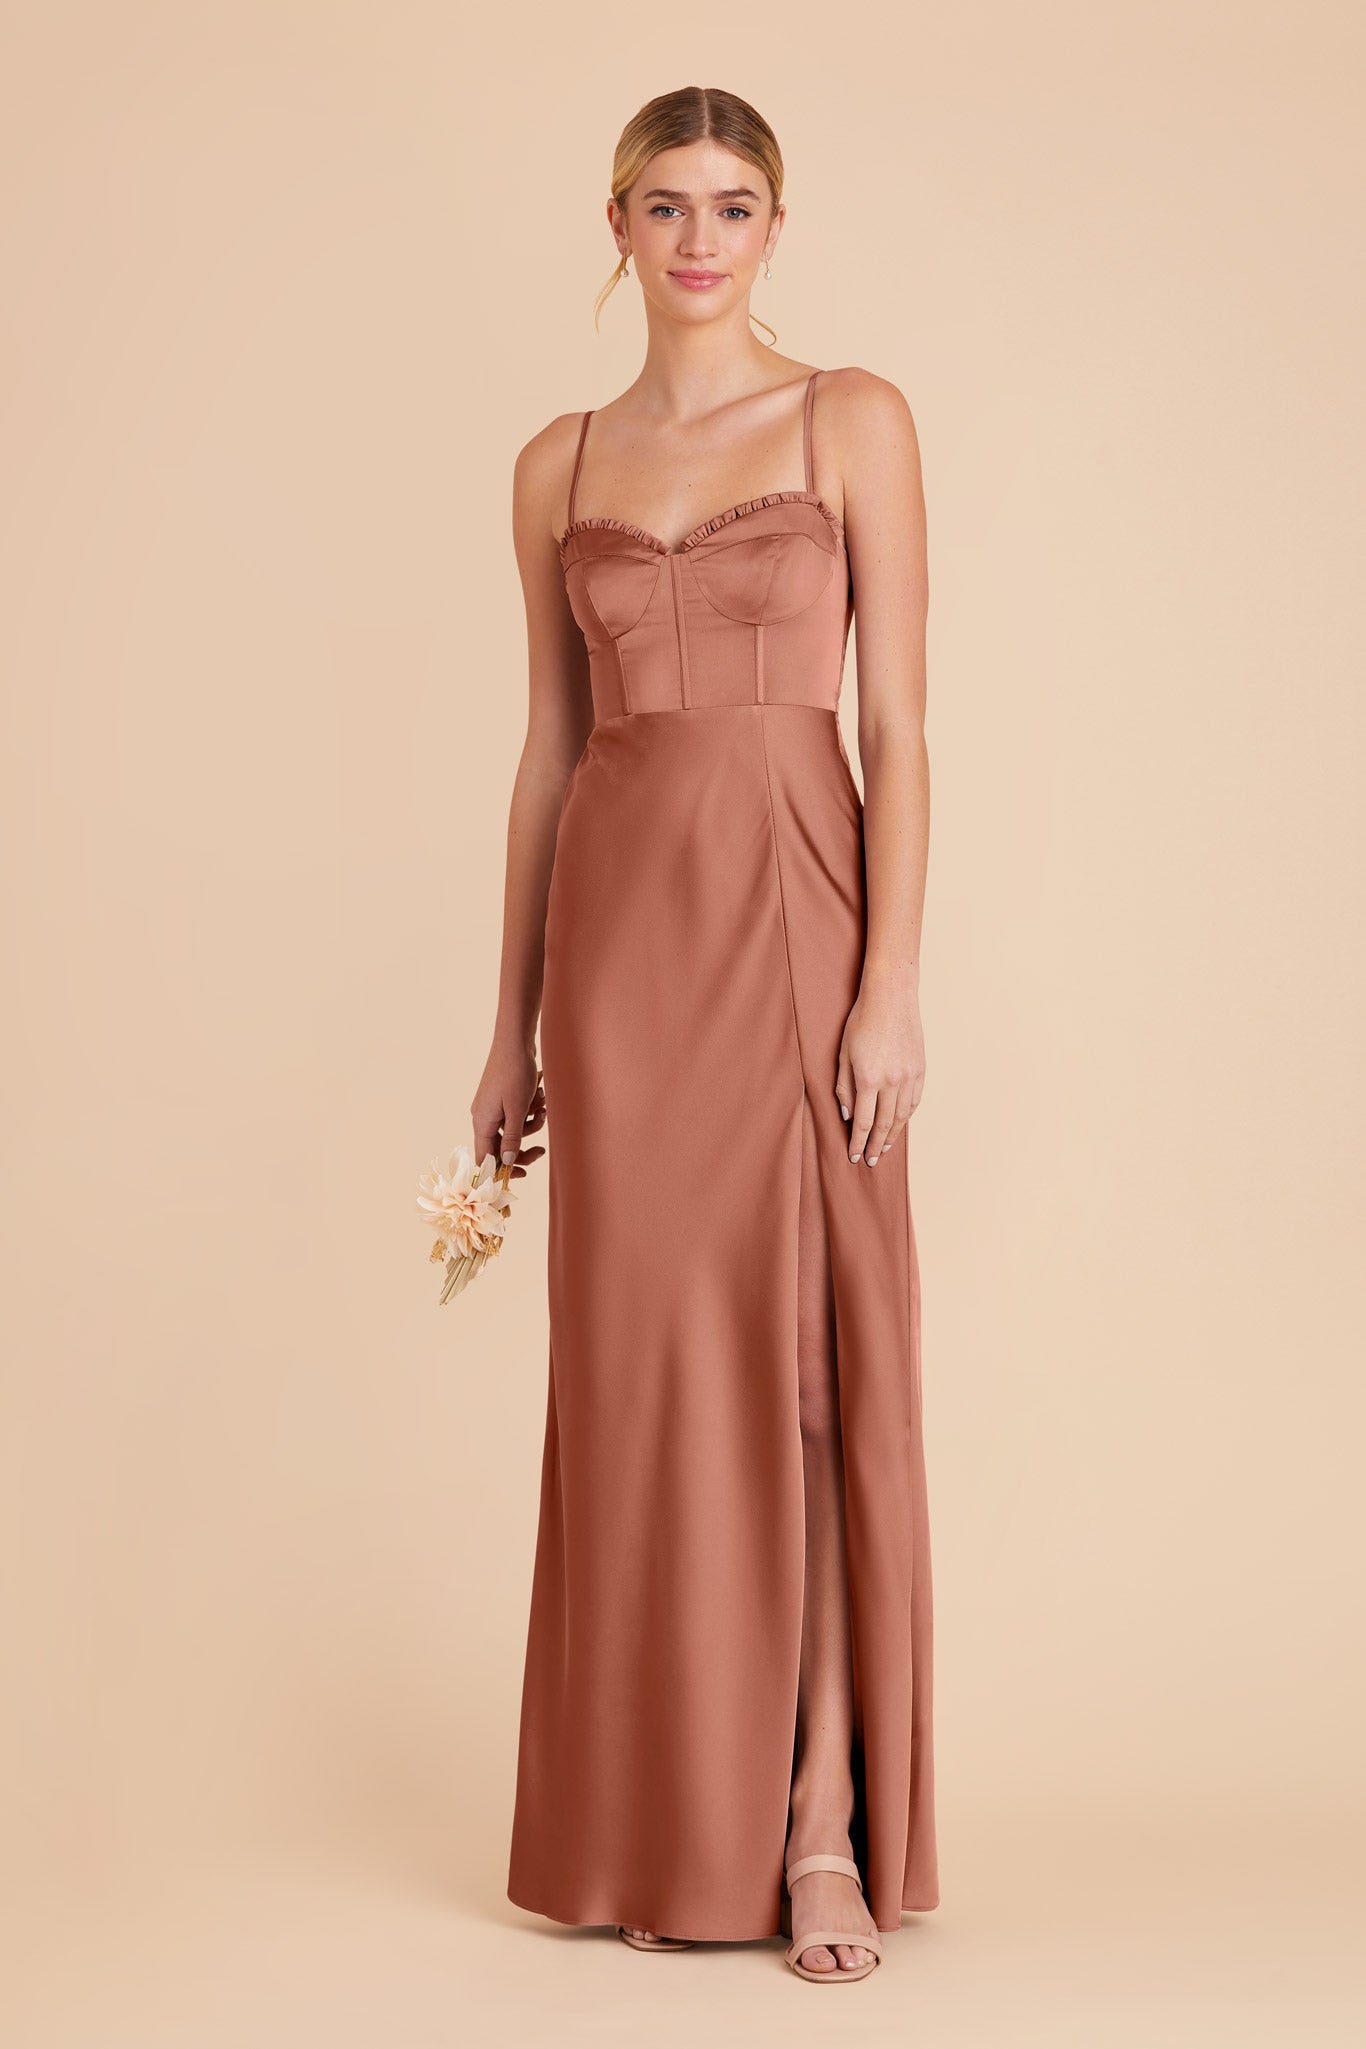 Desert Rose Jessica Matte Satin Dress by Birdy Grey